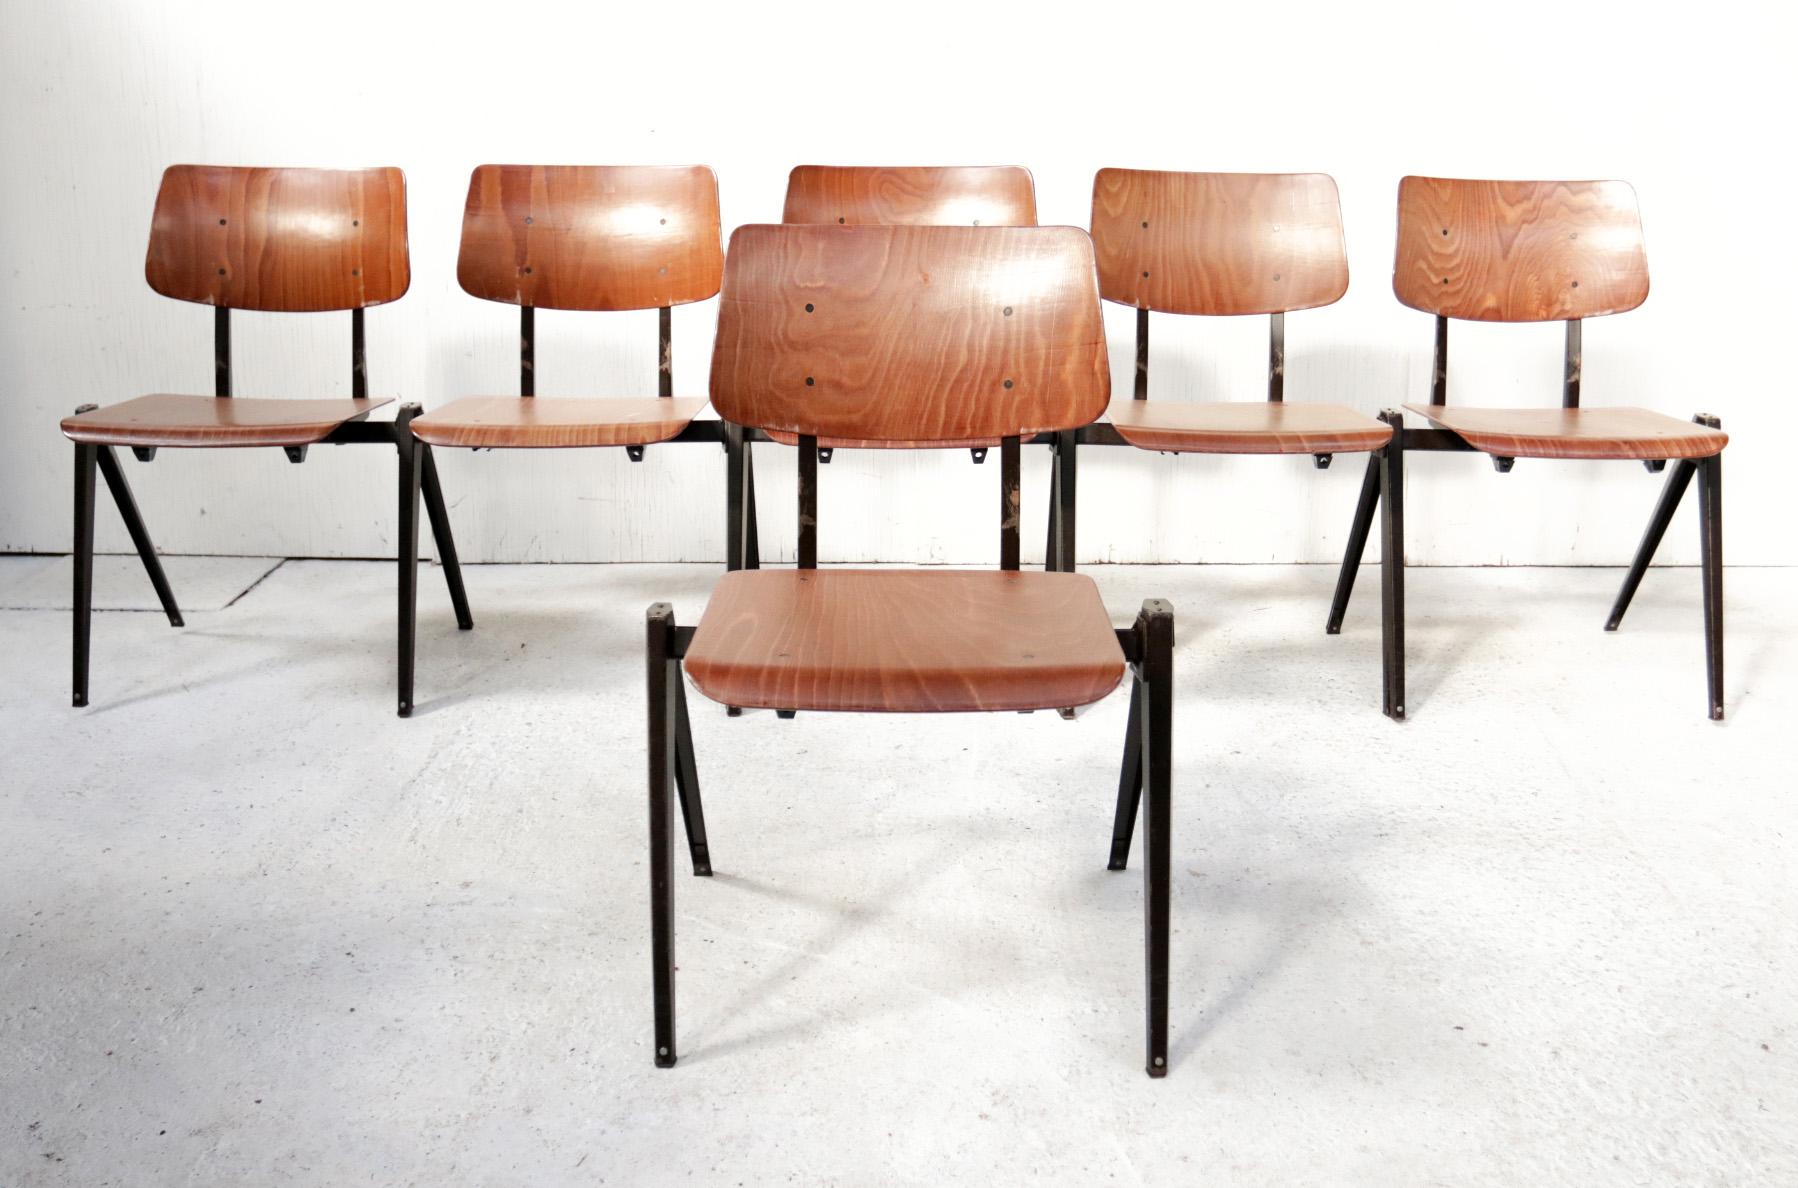 Dutch Industrial Design Prouve Style School Chairs S21 Compas Galvanitas For Sale 3